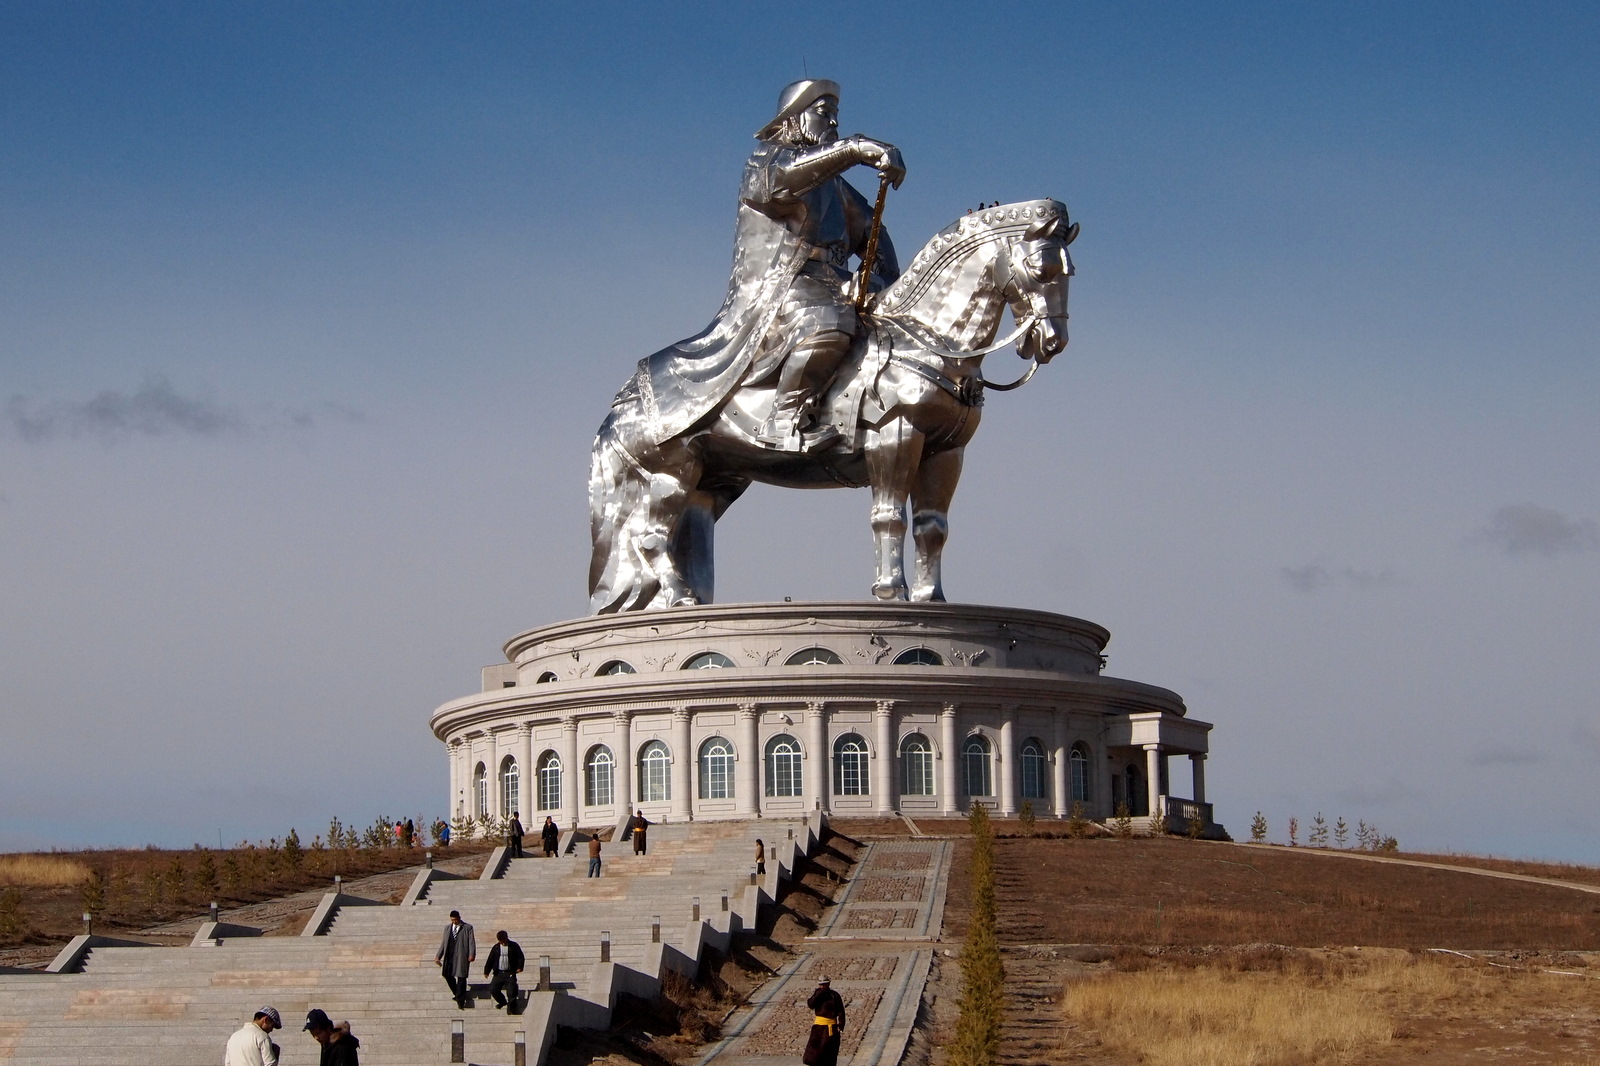 Хана улан. Статуя Чингисхана в Монголии. Памятник Чингисхану в Улан-Баторе. Статуя Чингисхана в Цонжин-Болдоге Монголия.